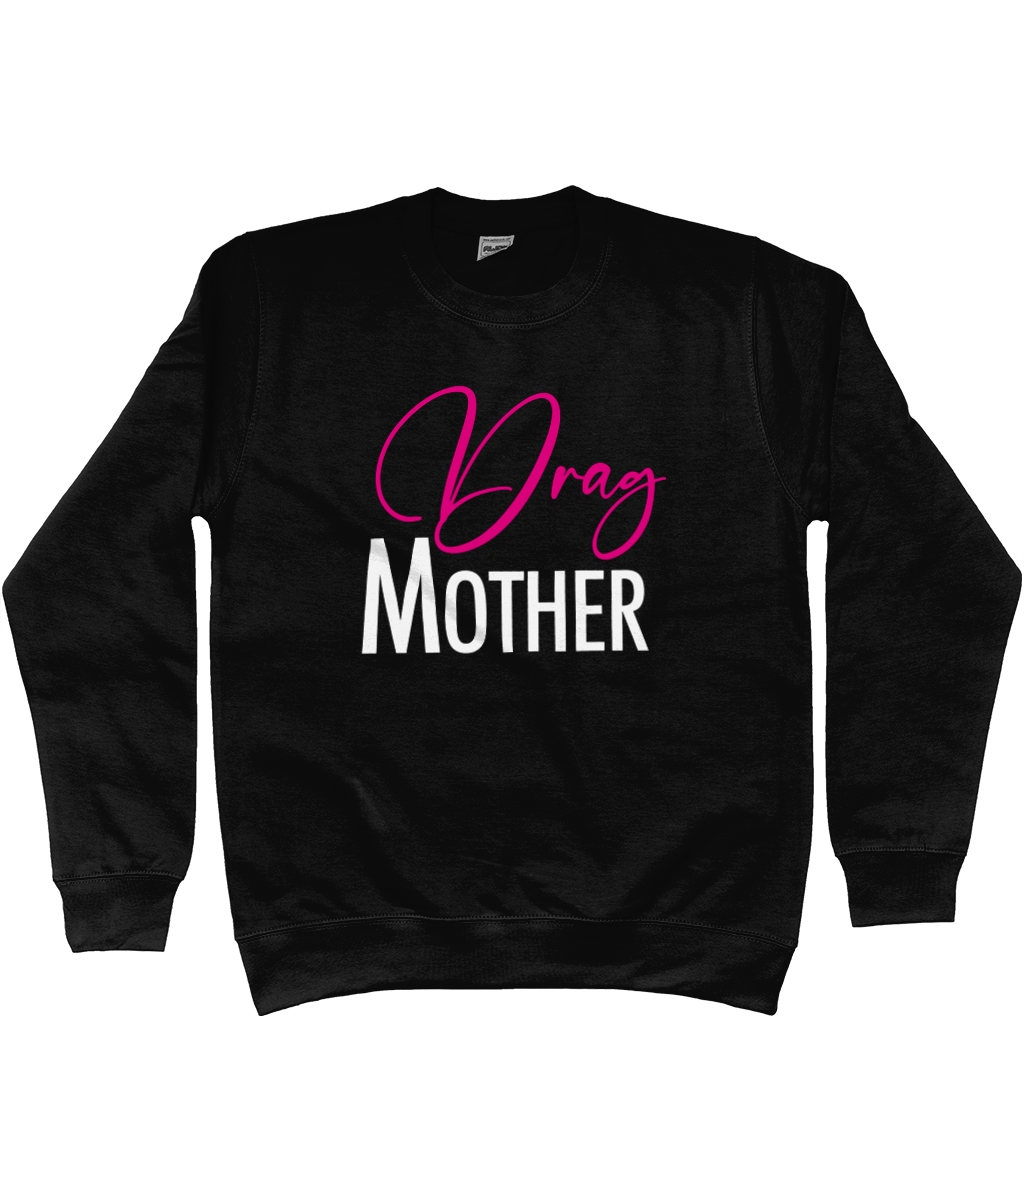 Snatched - Drag Mother Sweatshirt